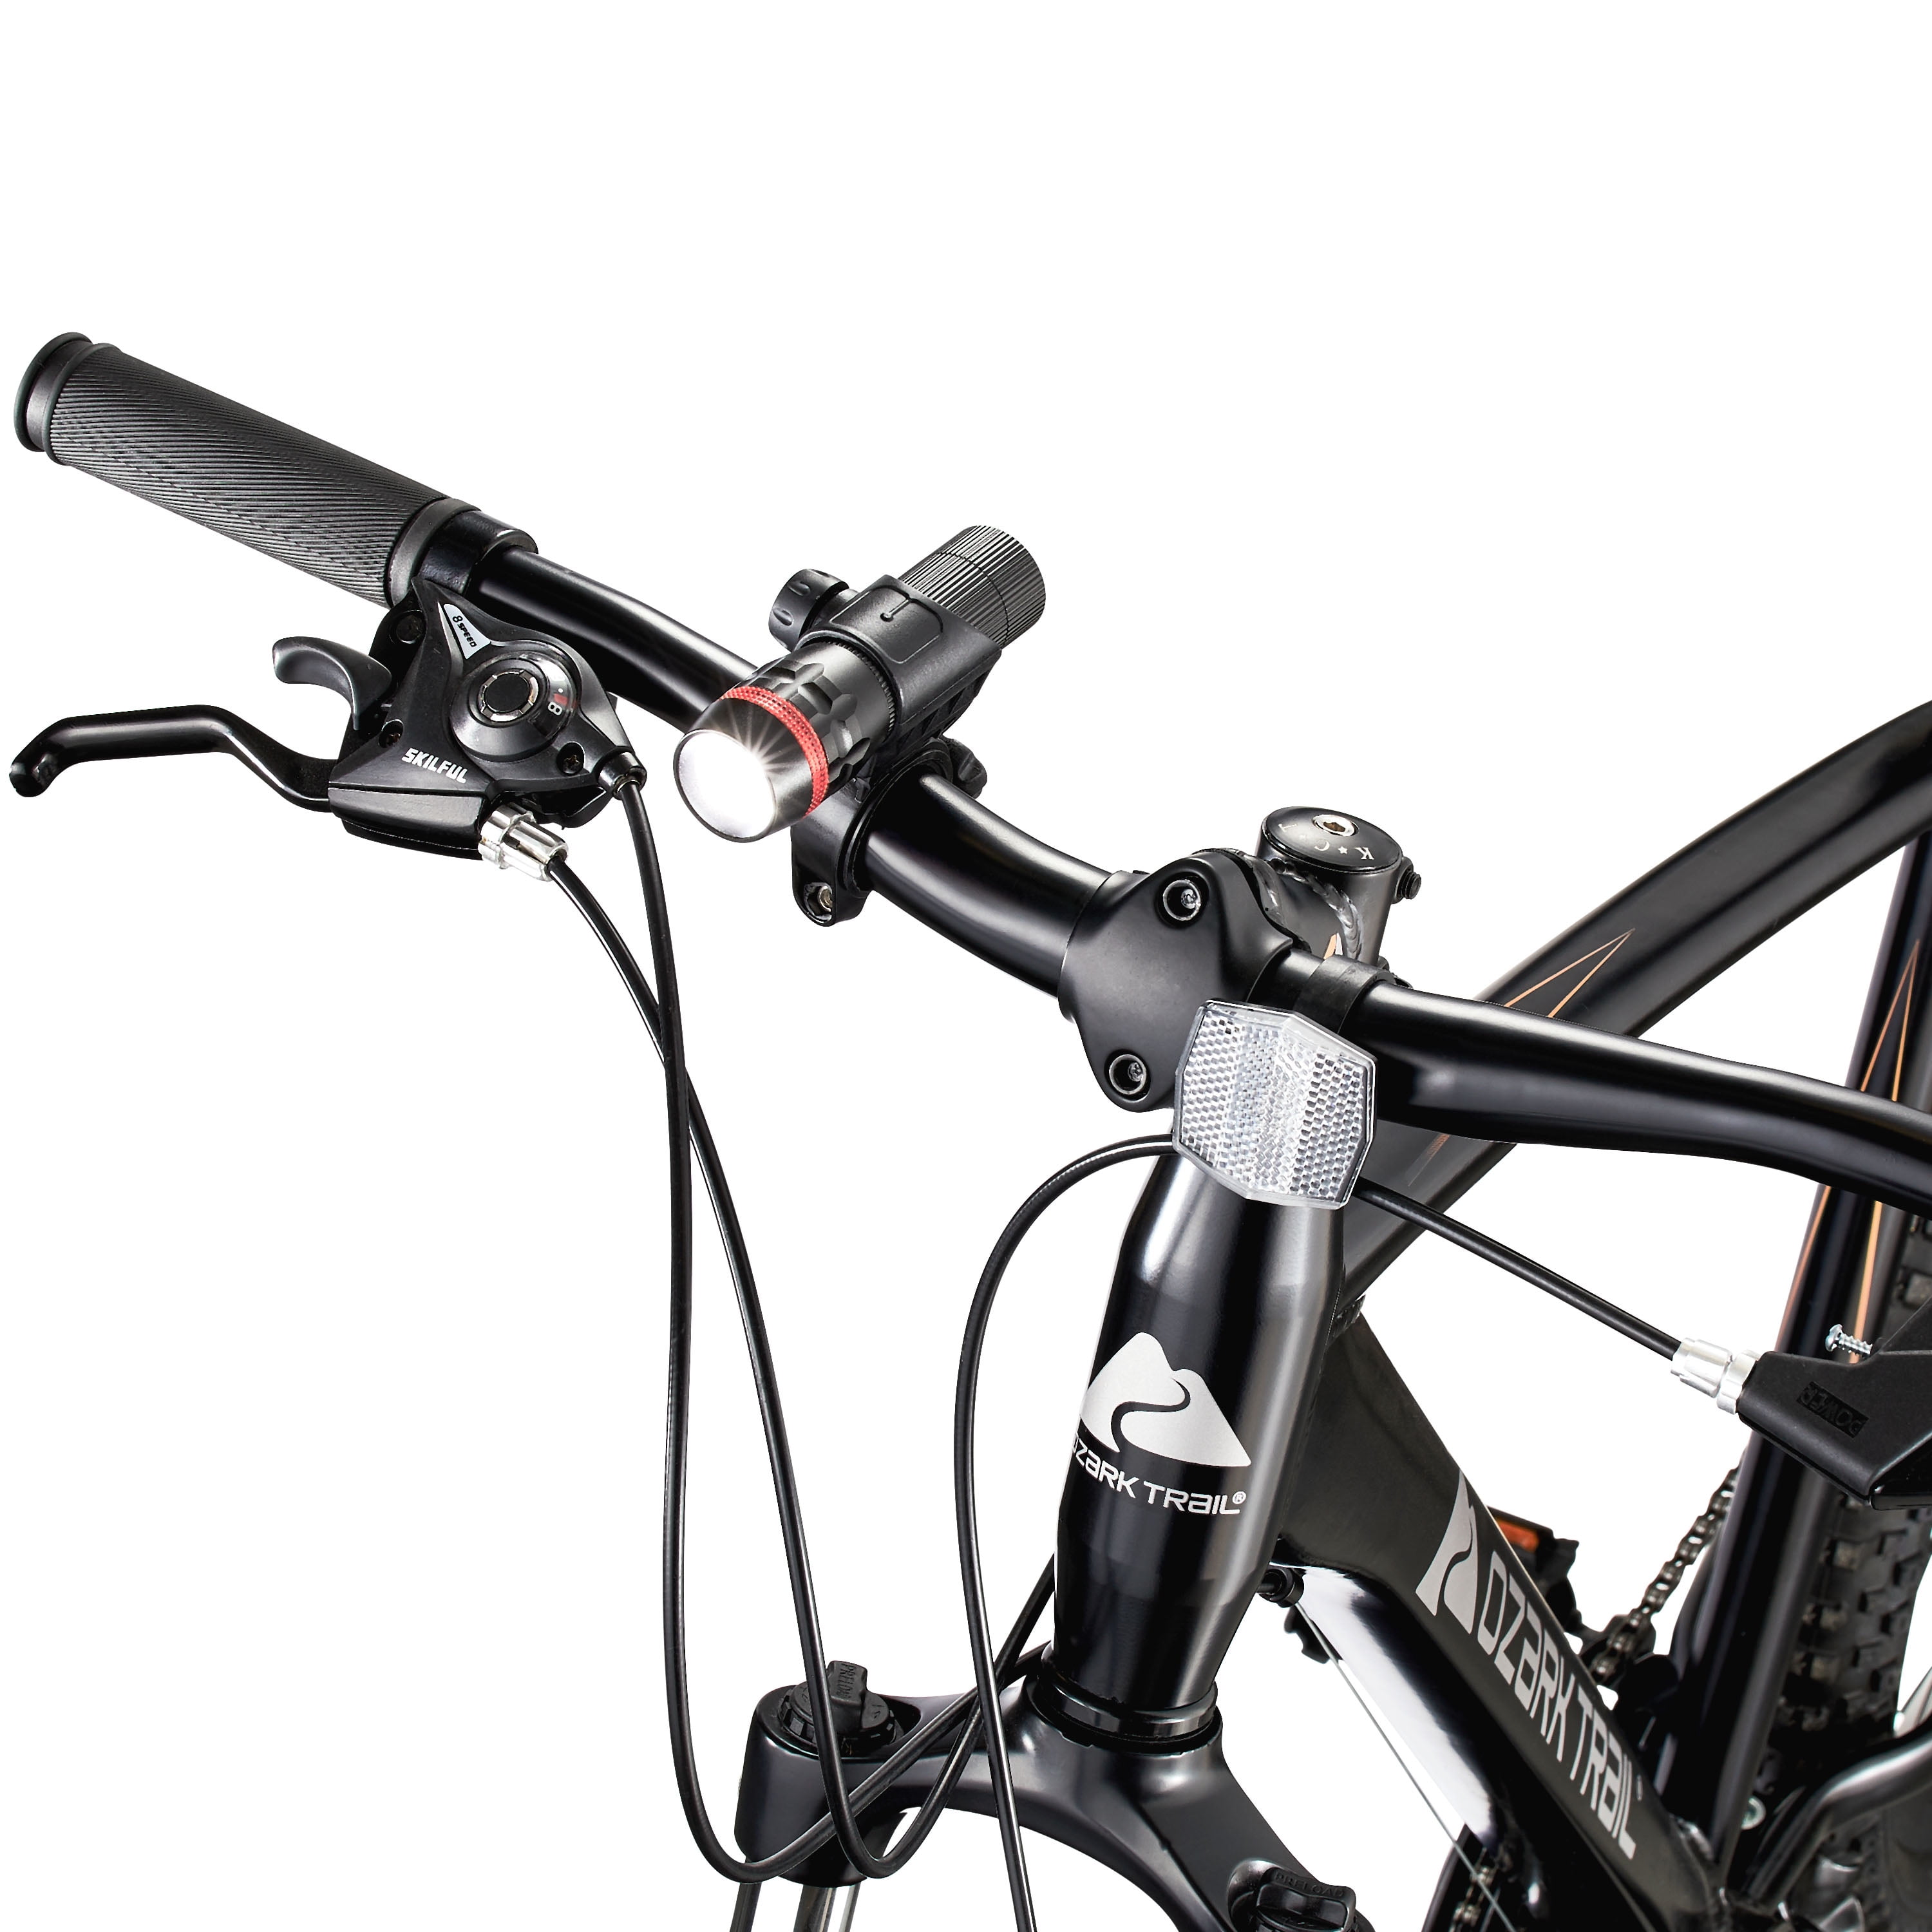 Ozark Trail Combo Mini Bike Light Set, Headlight & Taillight